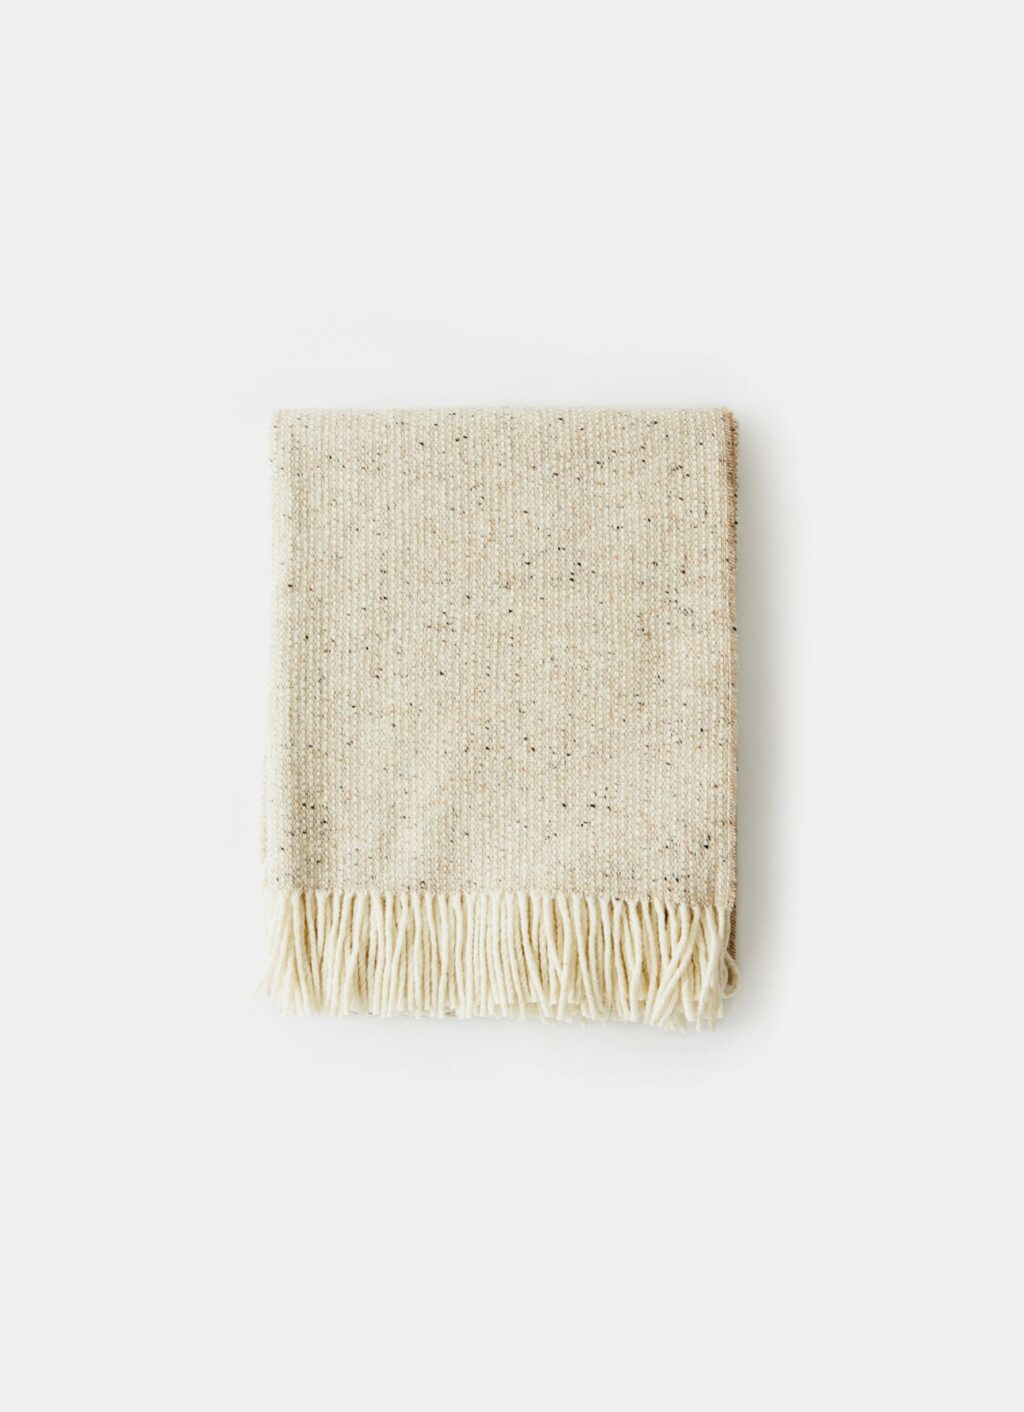 Mourne Textiles - Tweed Emphasize - Merino Blanket - Oatmeal